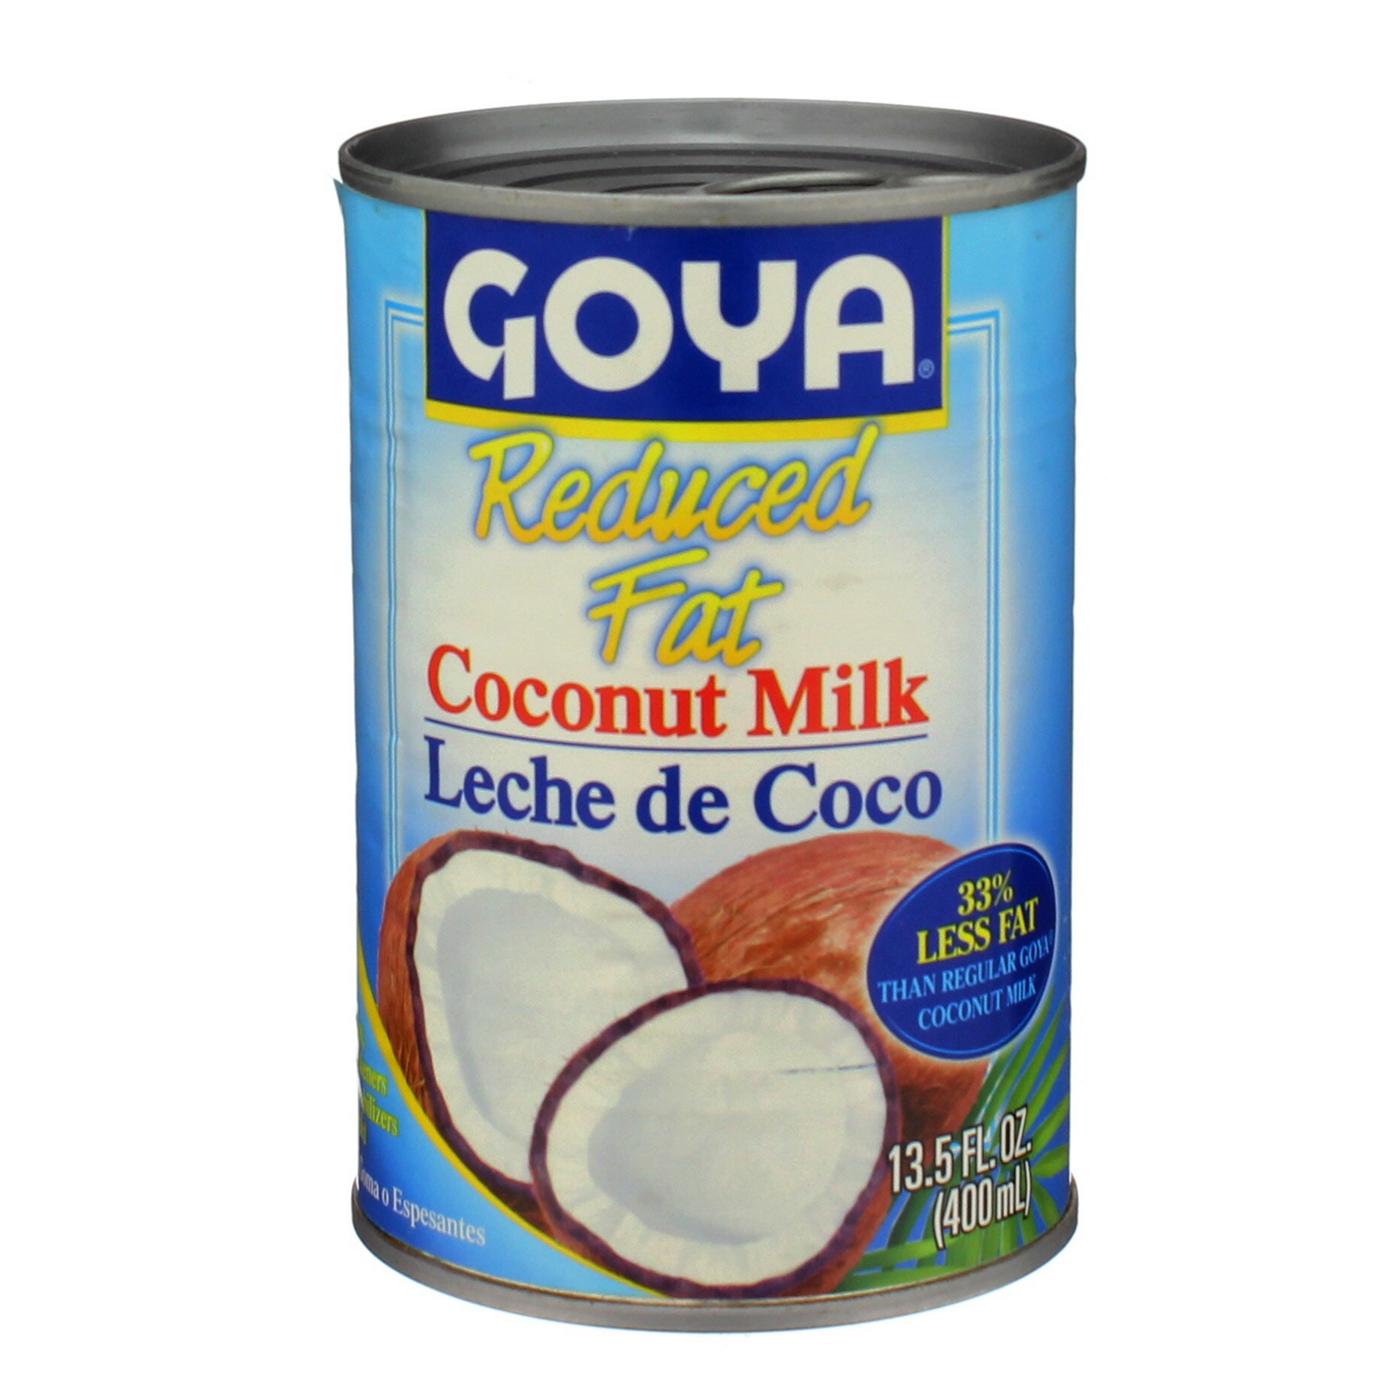 Goya Reduced Fat Leche de Coco (Coconut Milk); image 1 of 2